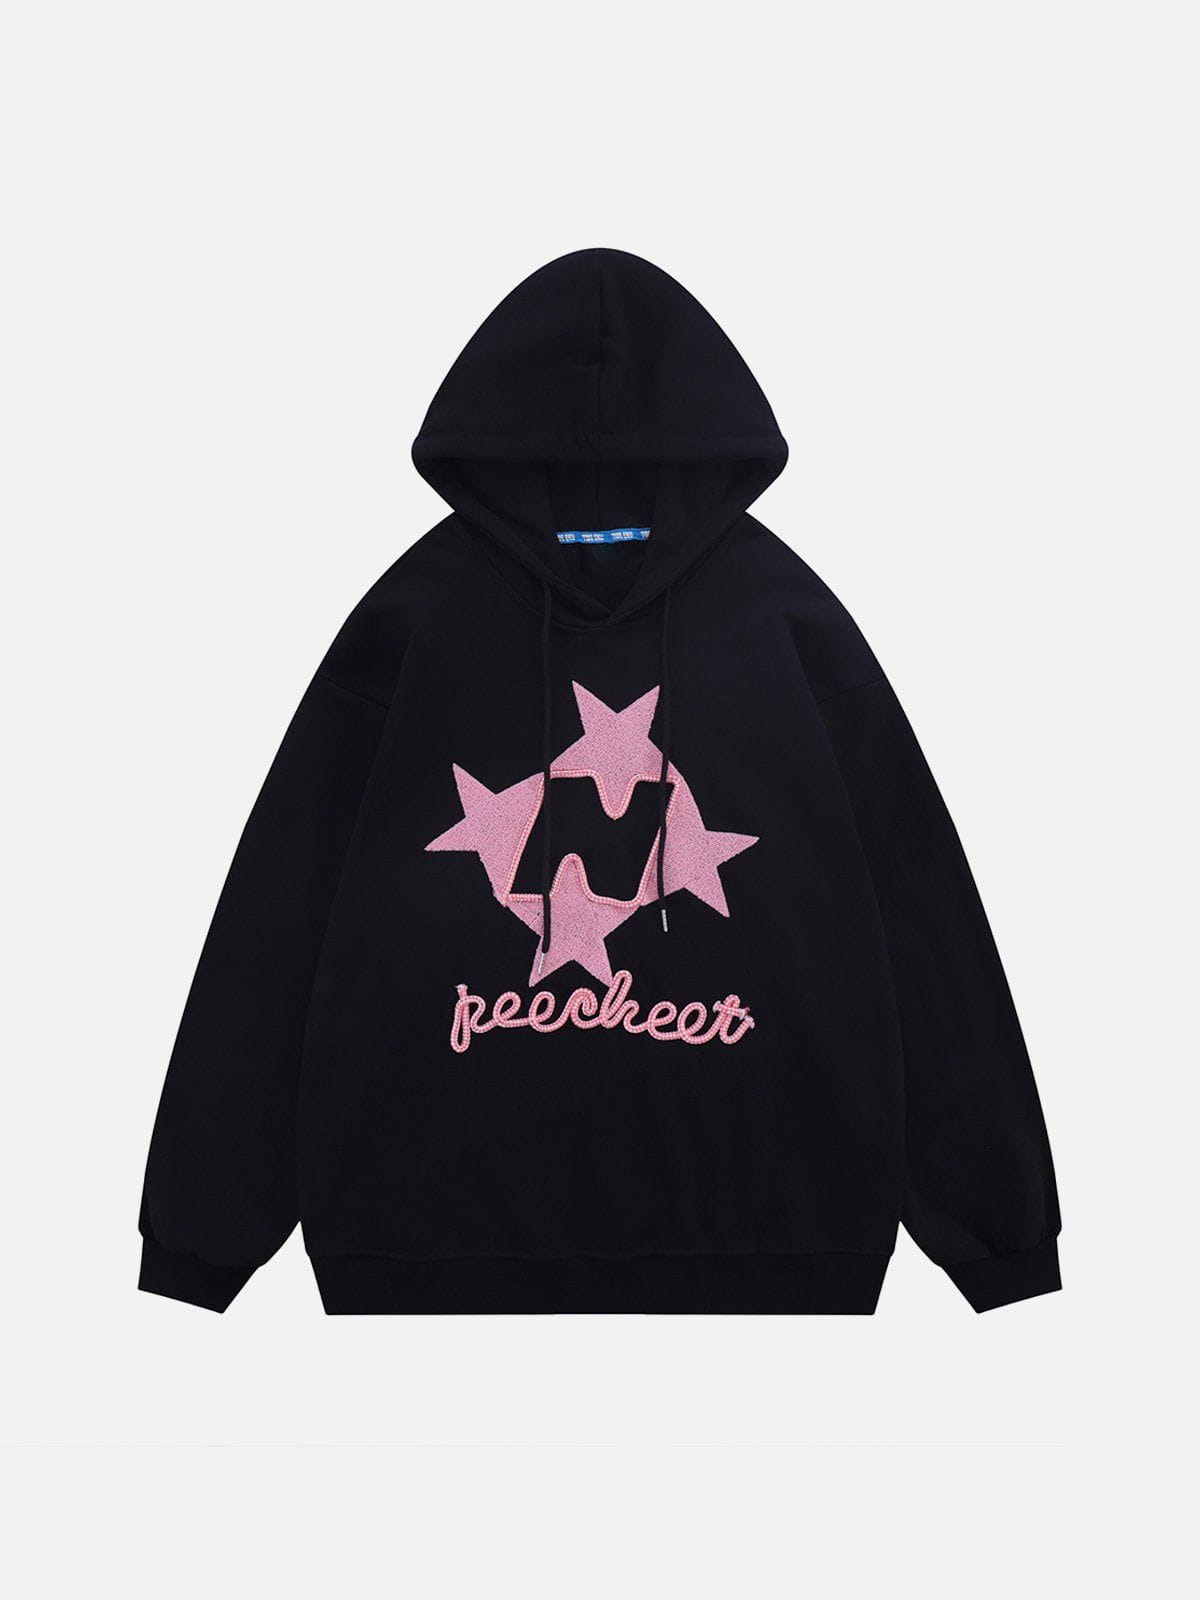 Majesda® - Flocked Stars Print Hoodie outfit ideas streetwear fashion